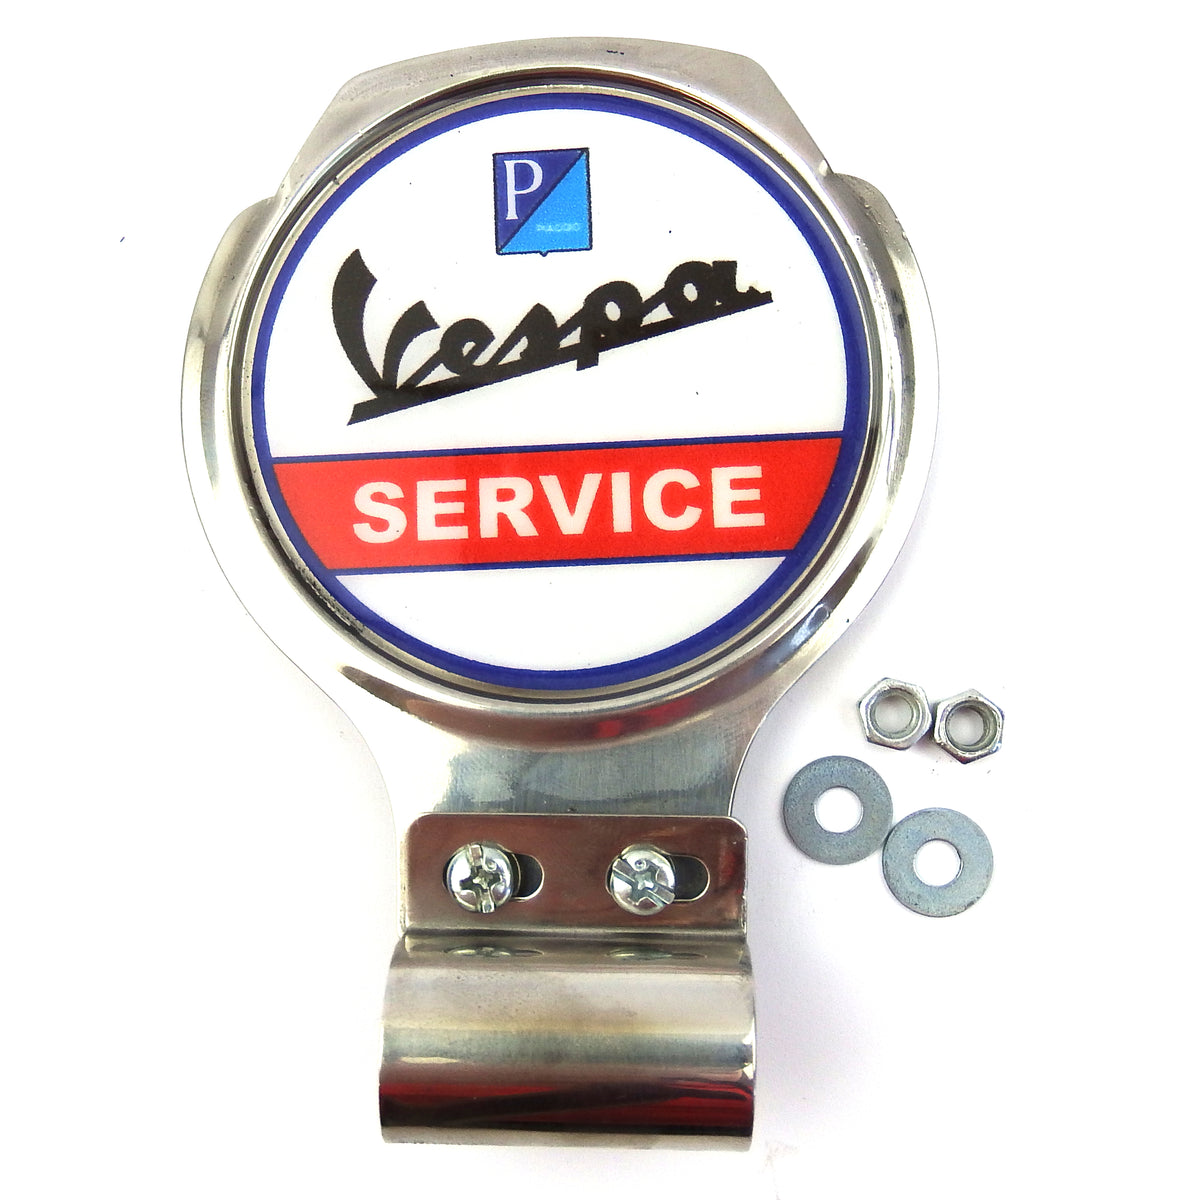 Vespa Lambretta Vespa Service Badge Bar Plaque - Stainless Steel